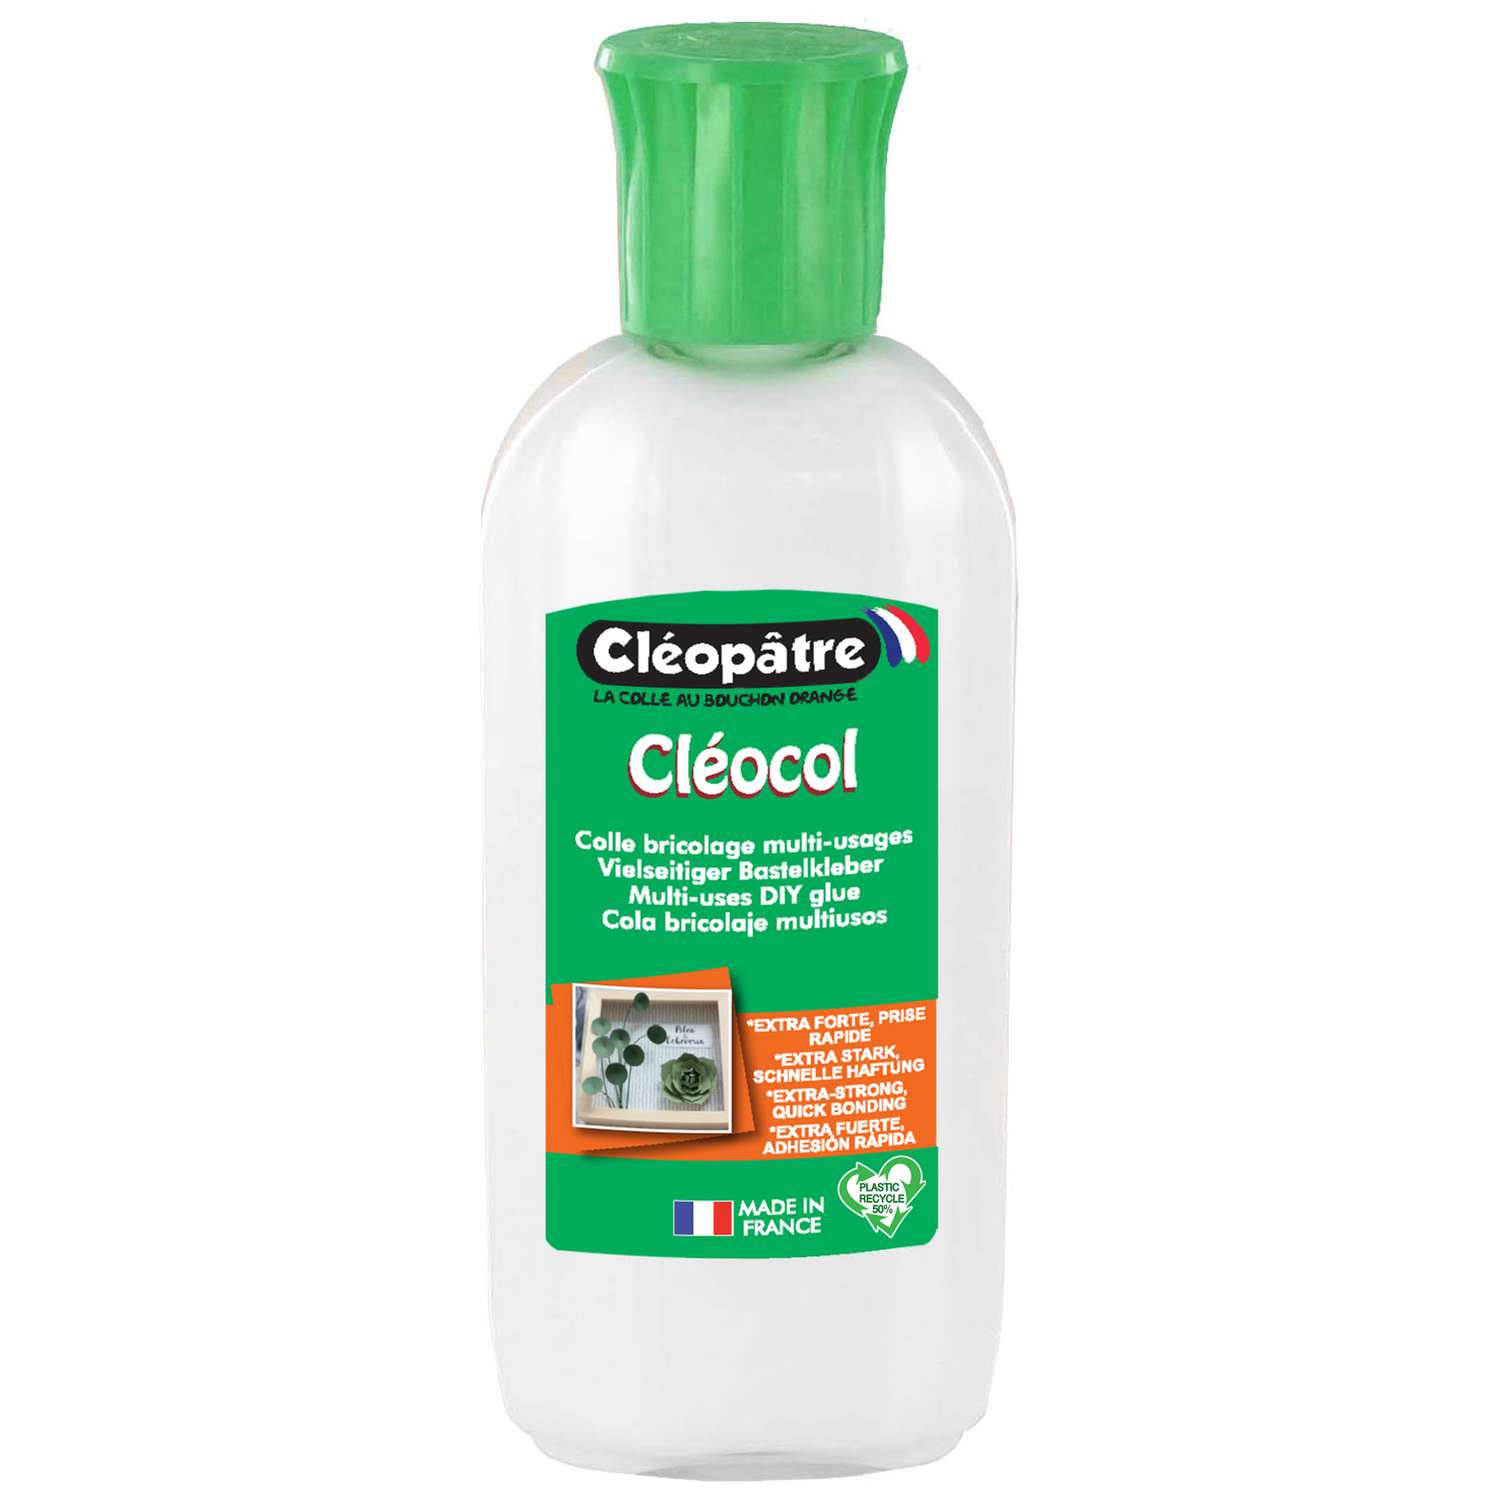 Cléopâtre Cléocol White PVA Glue, 50,000+ Art Supplies